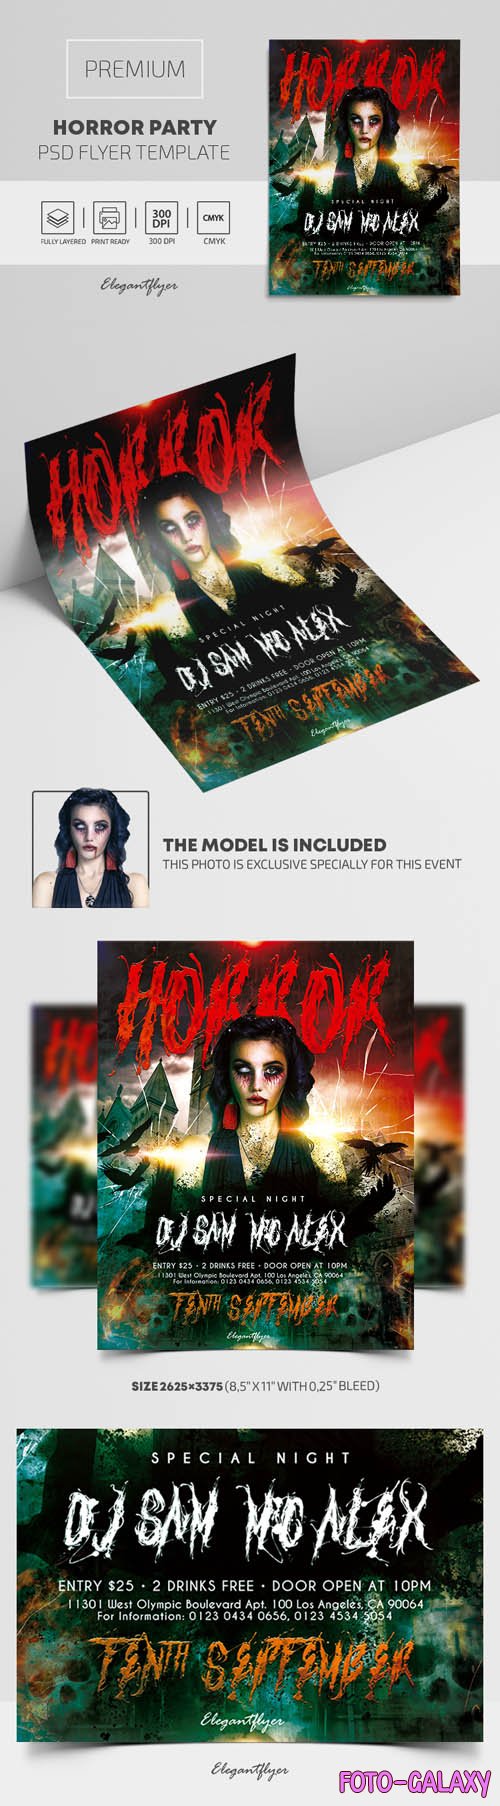 Horror Party Premium PSD Flyer Template